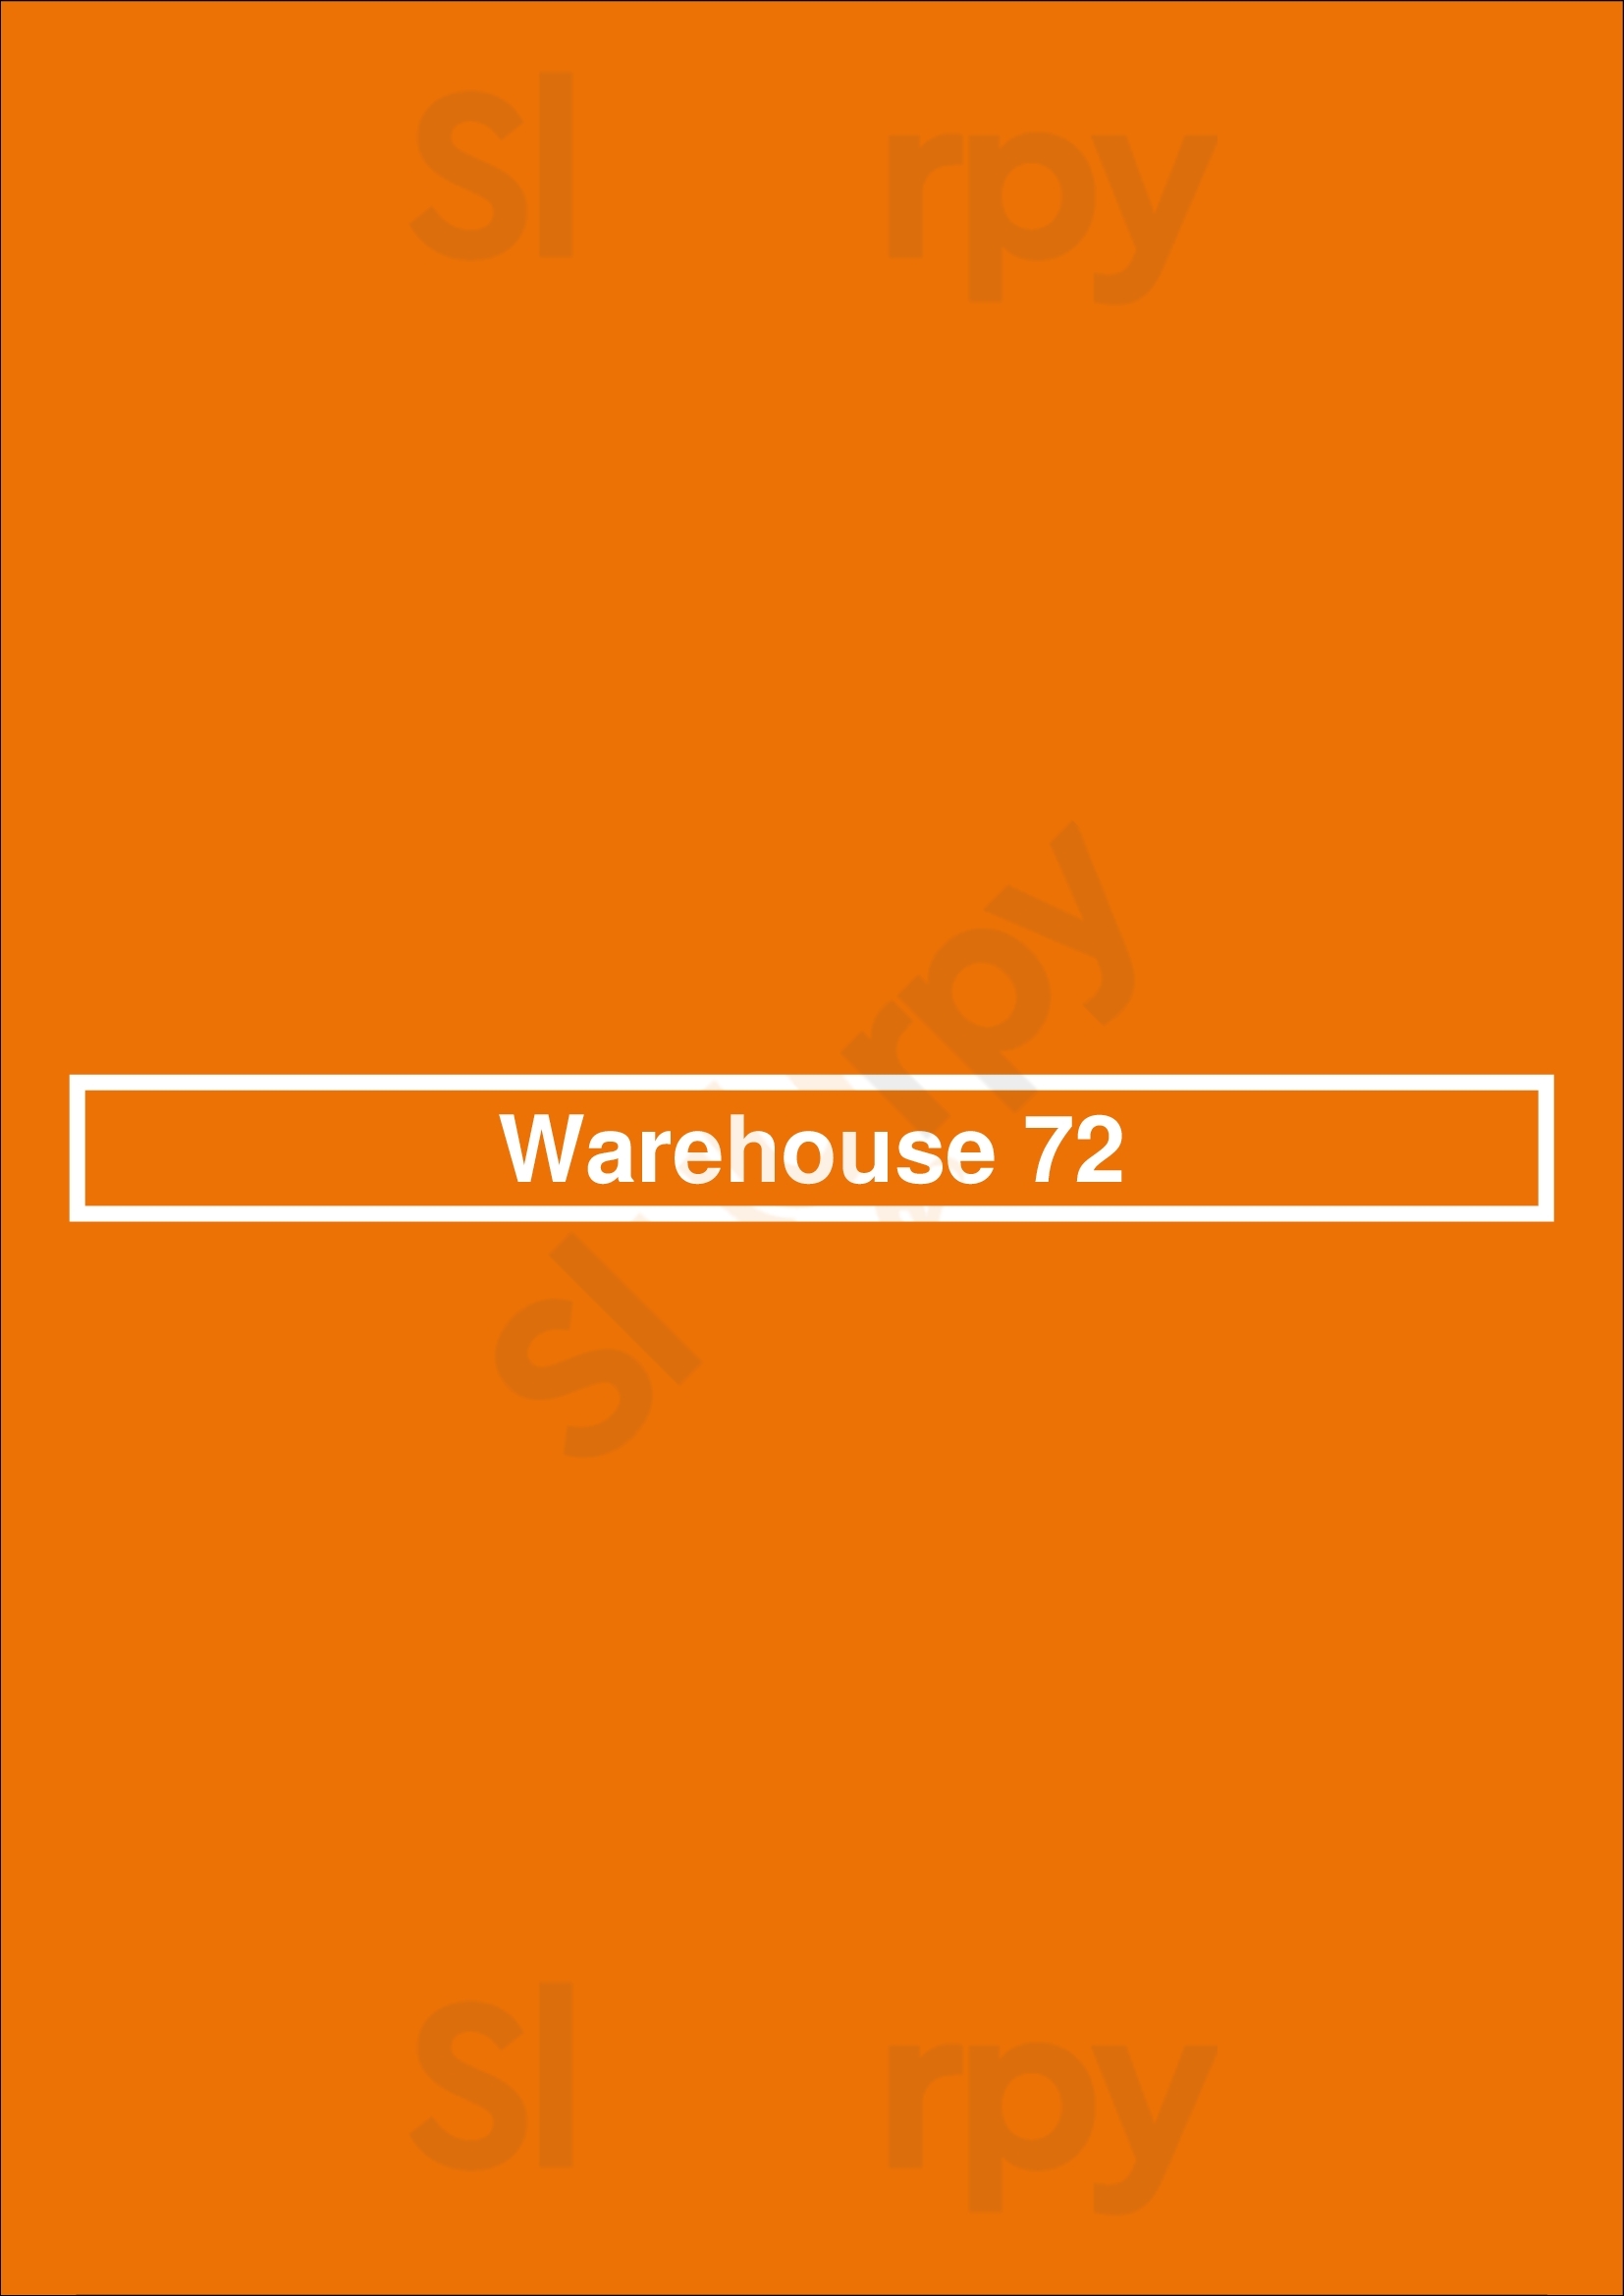 Warehouse 72 Houston Menu - 1